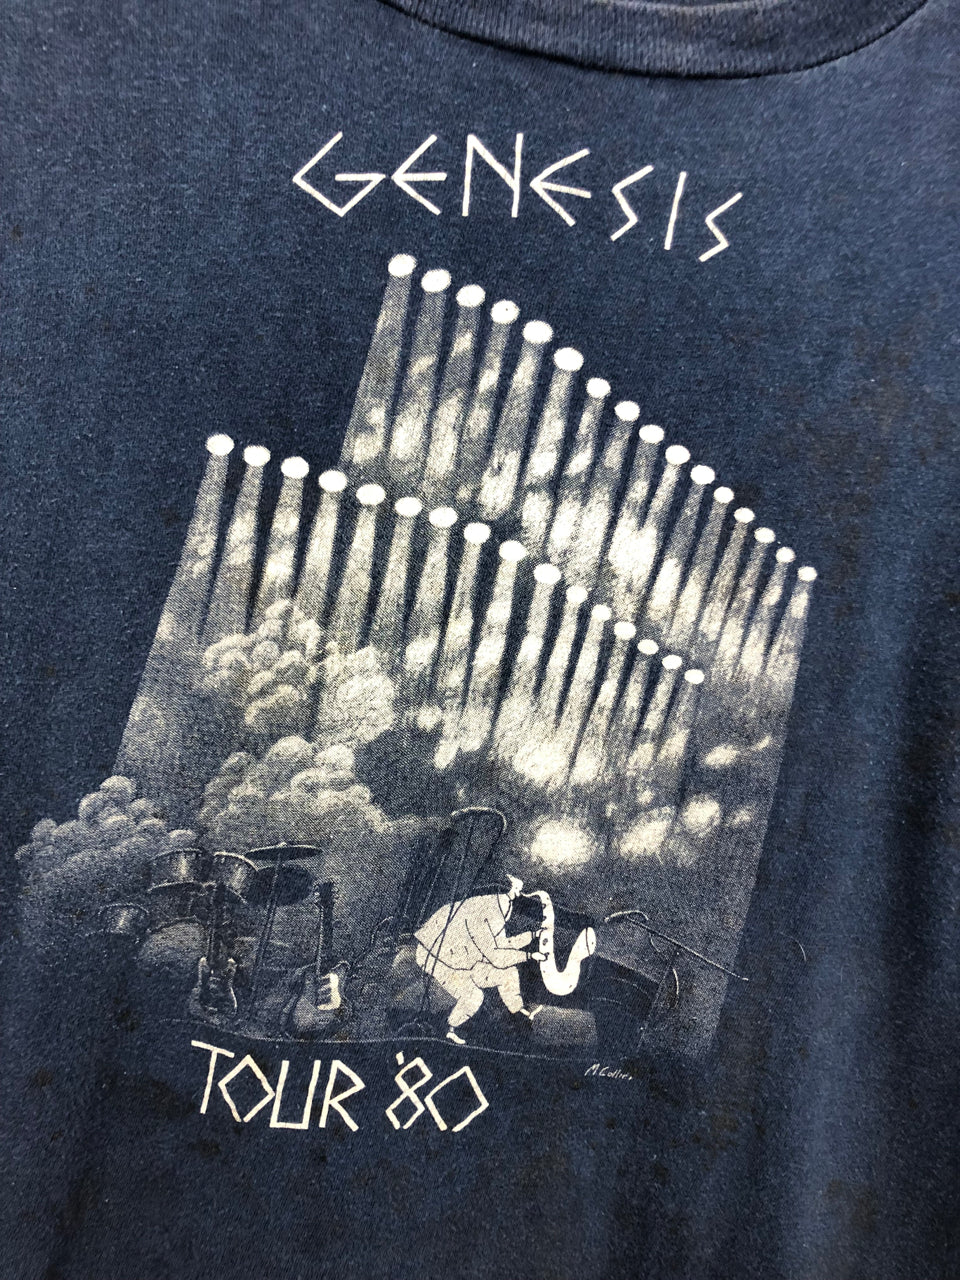 Genesis Tour '80 T-Shirt